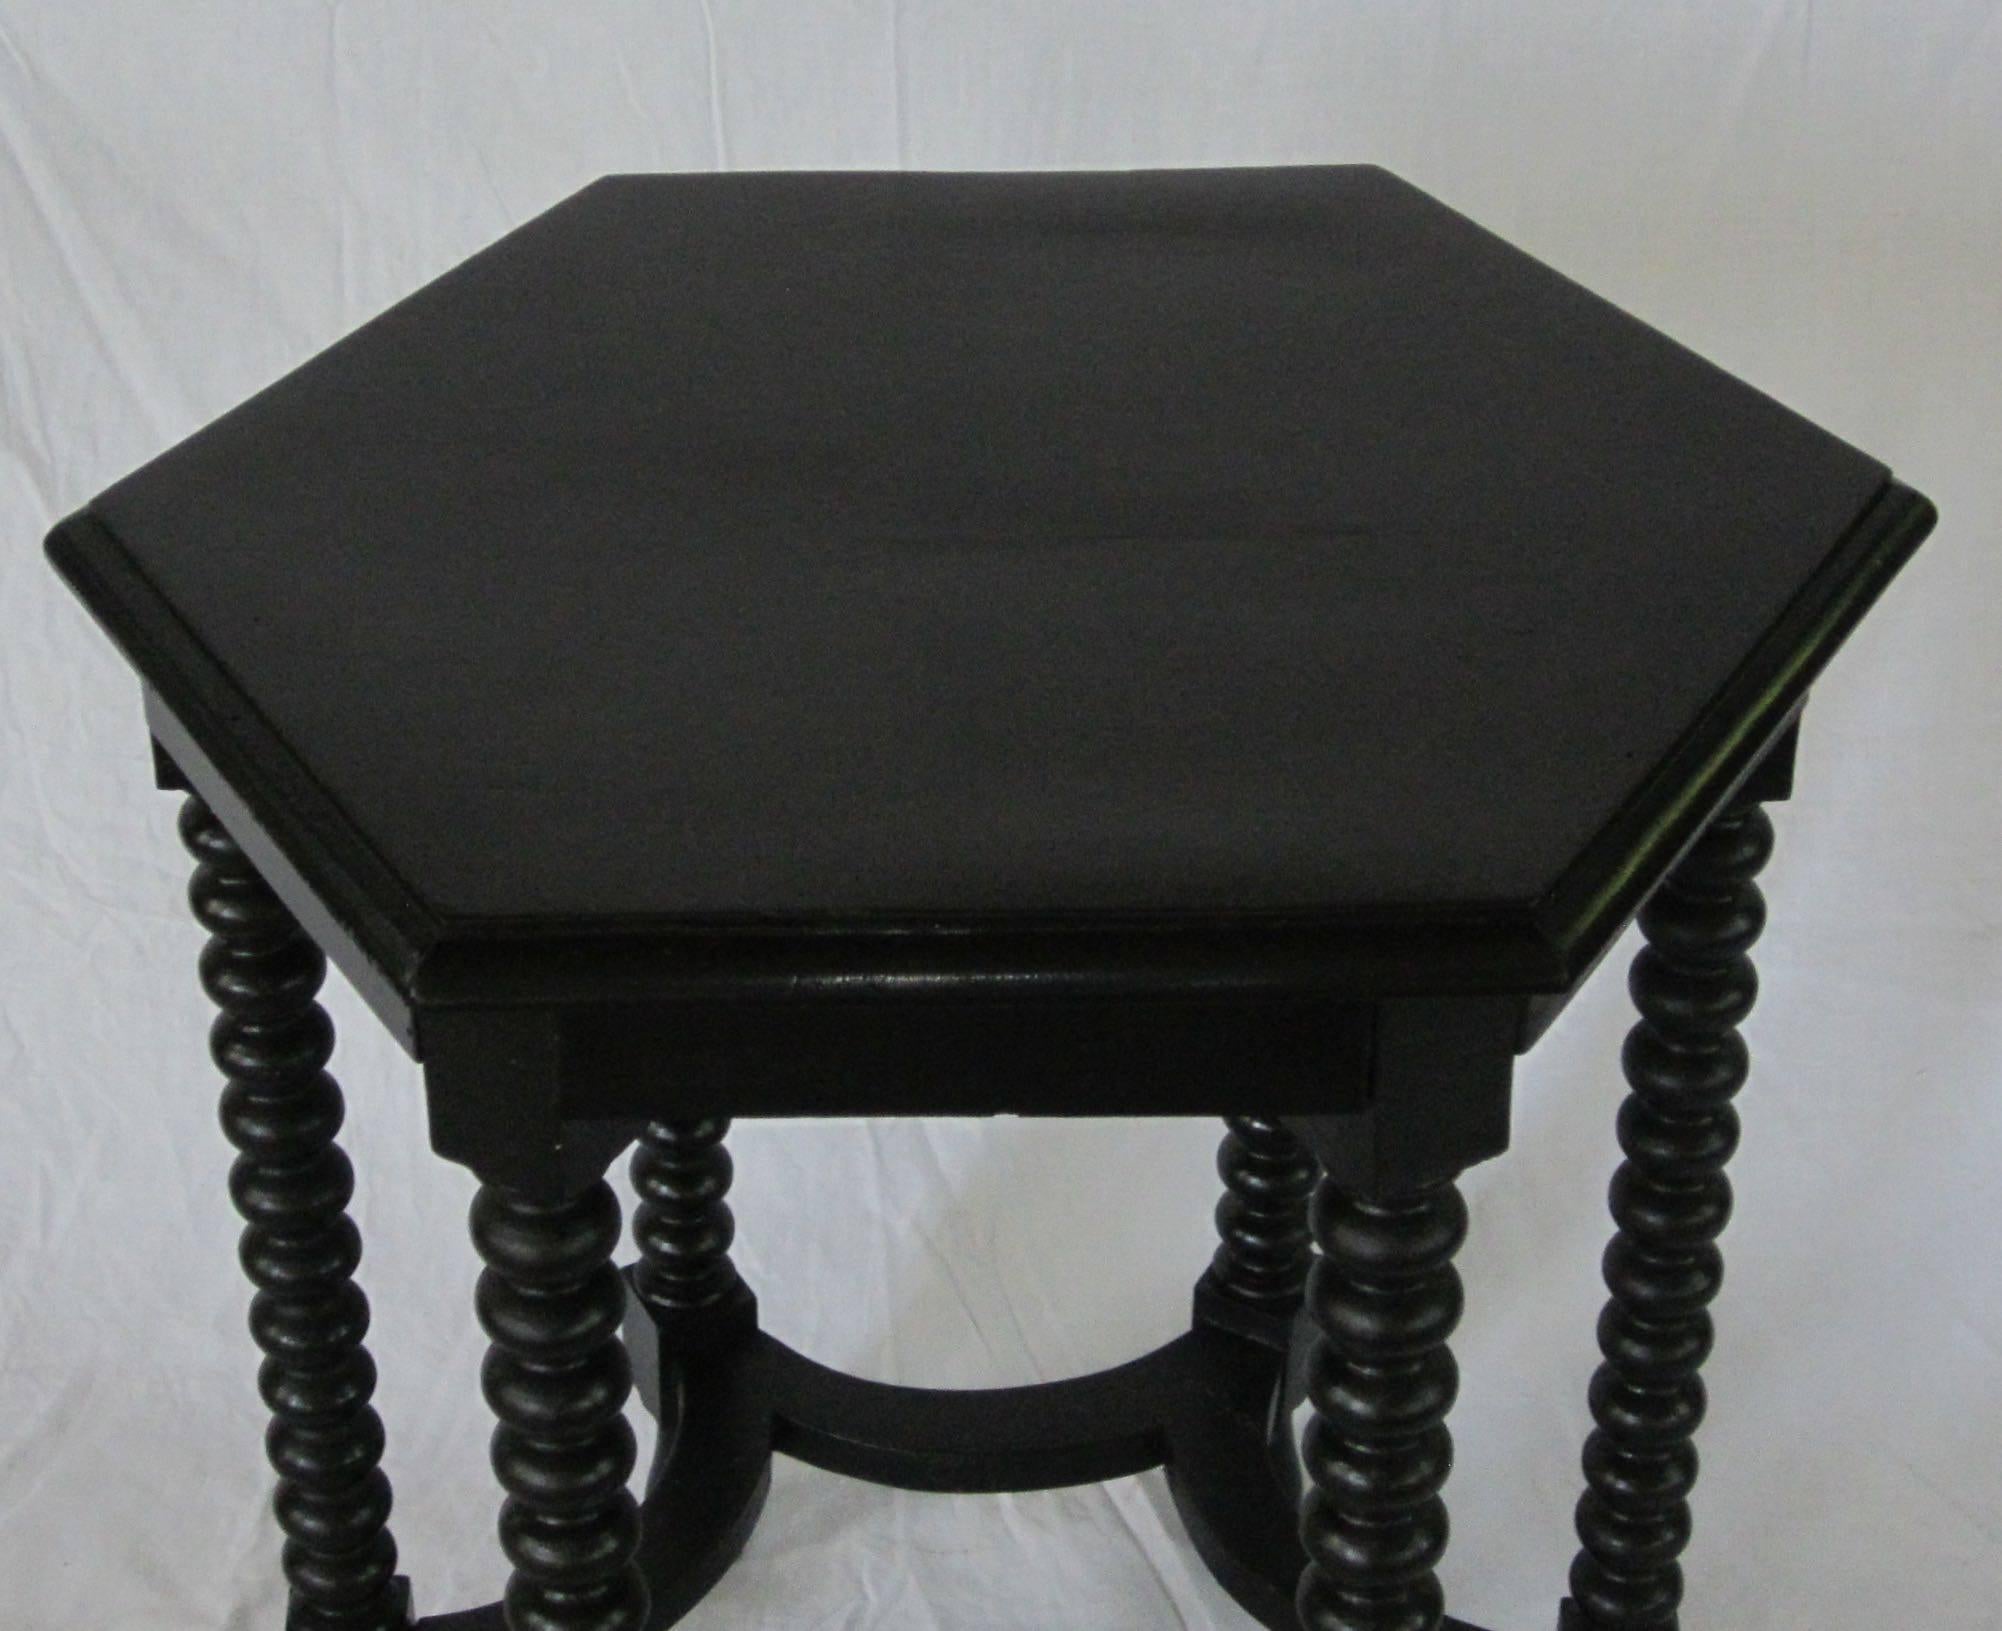 19th century Italian black ebony hexagonal spool leg side table.
